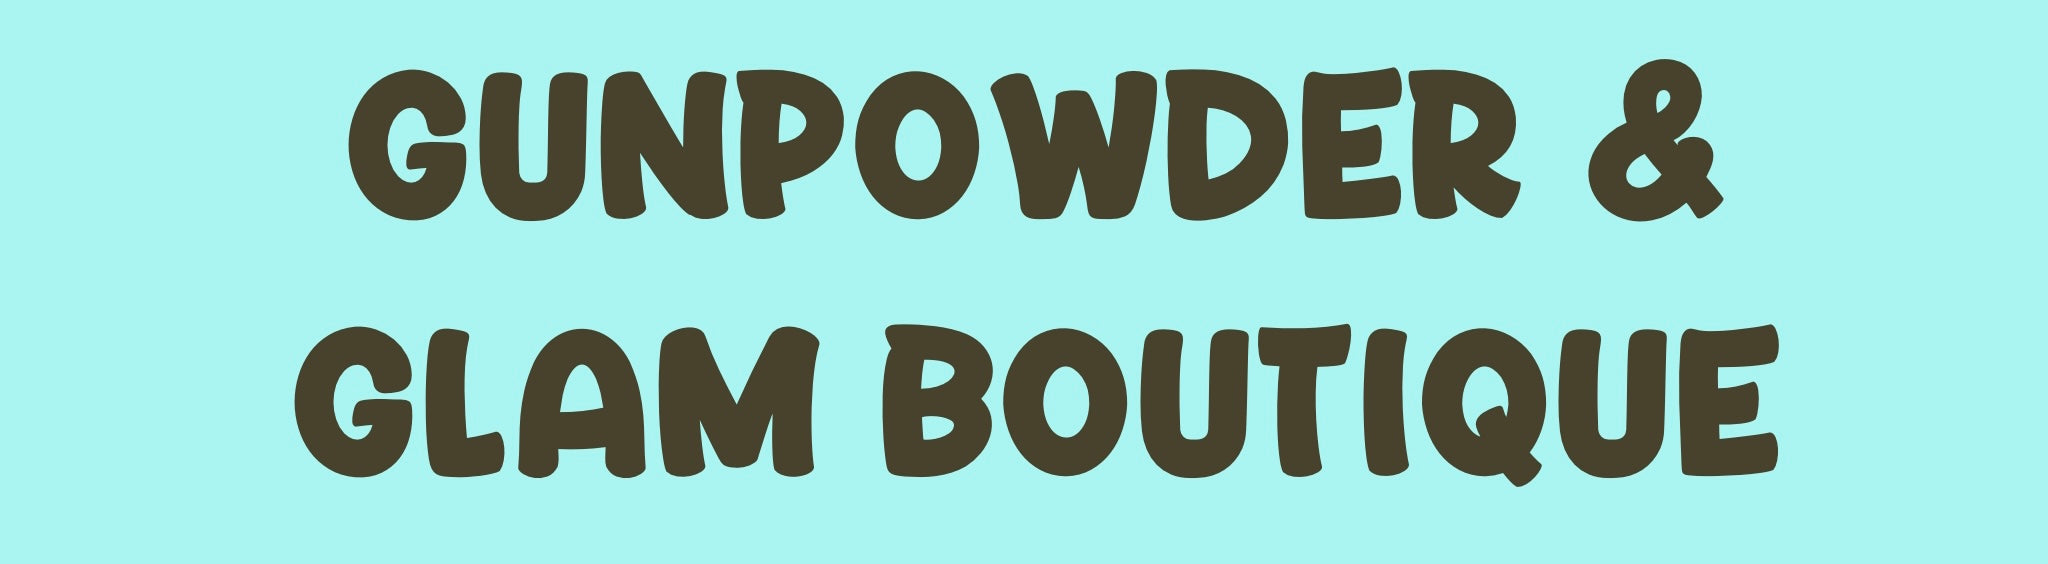 Gunpowder and Glam Boutique – Gunpowder and Glam Boutique